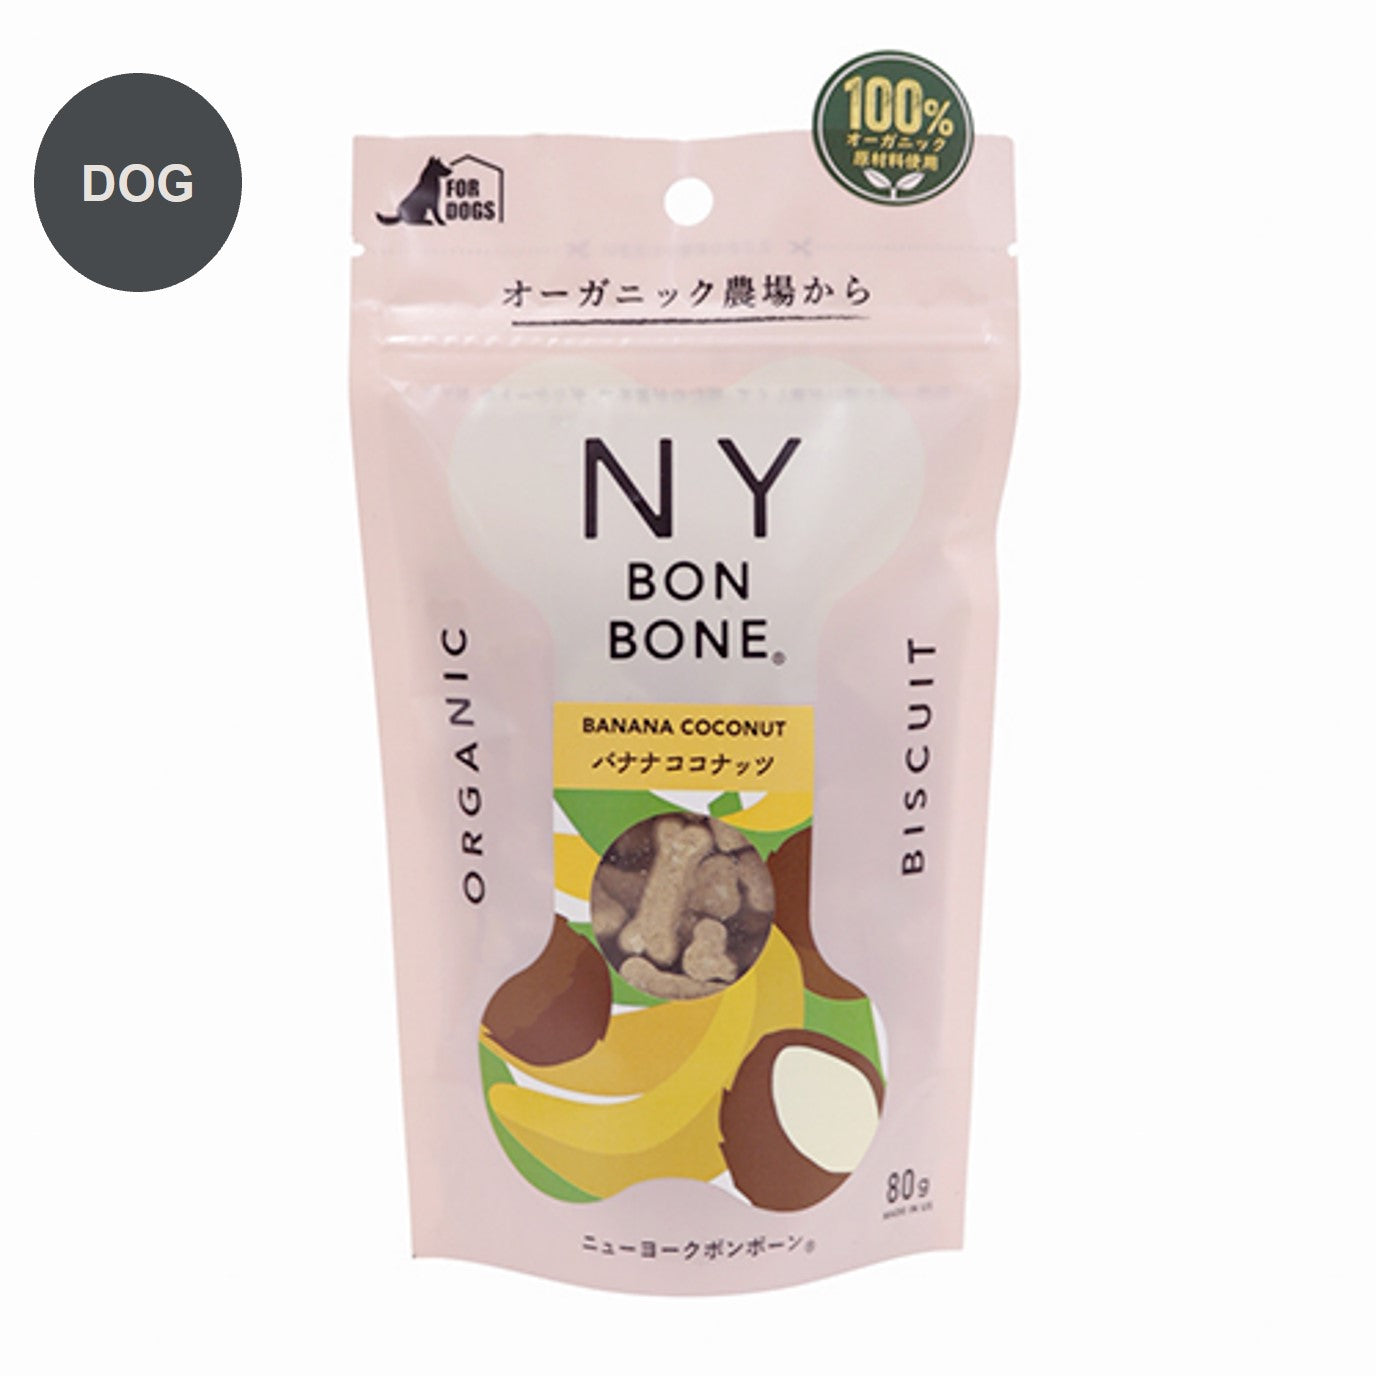 NY BONBONE　バナナココナッツ味　DOG